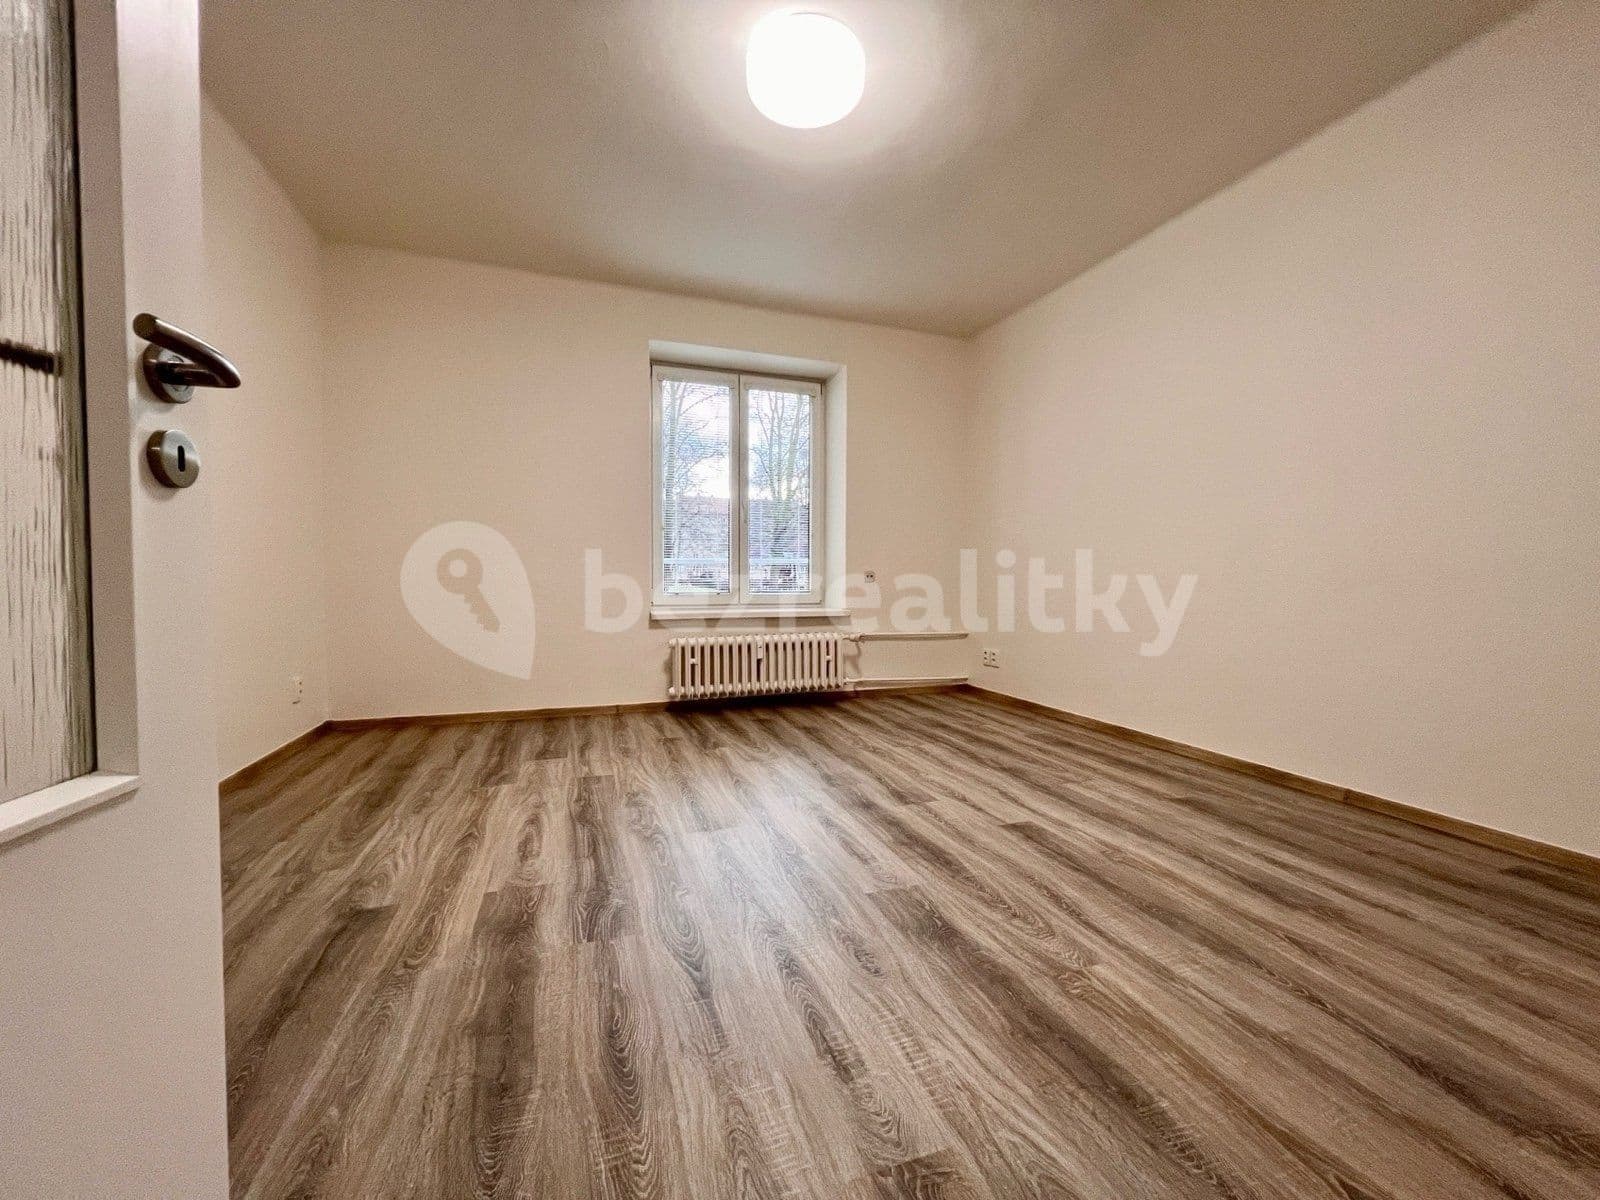 2 bedroom flat to rent, 55 m², Komenského, Ostrava, Moravskoslezský Region